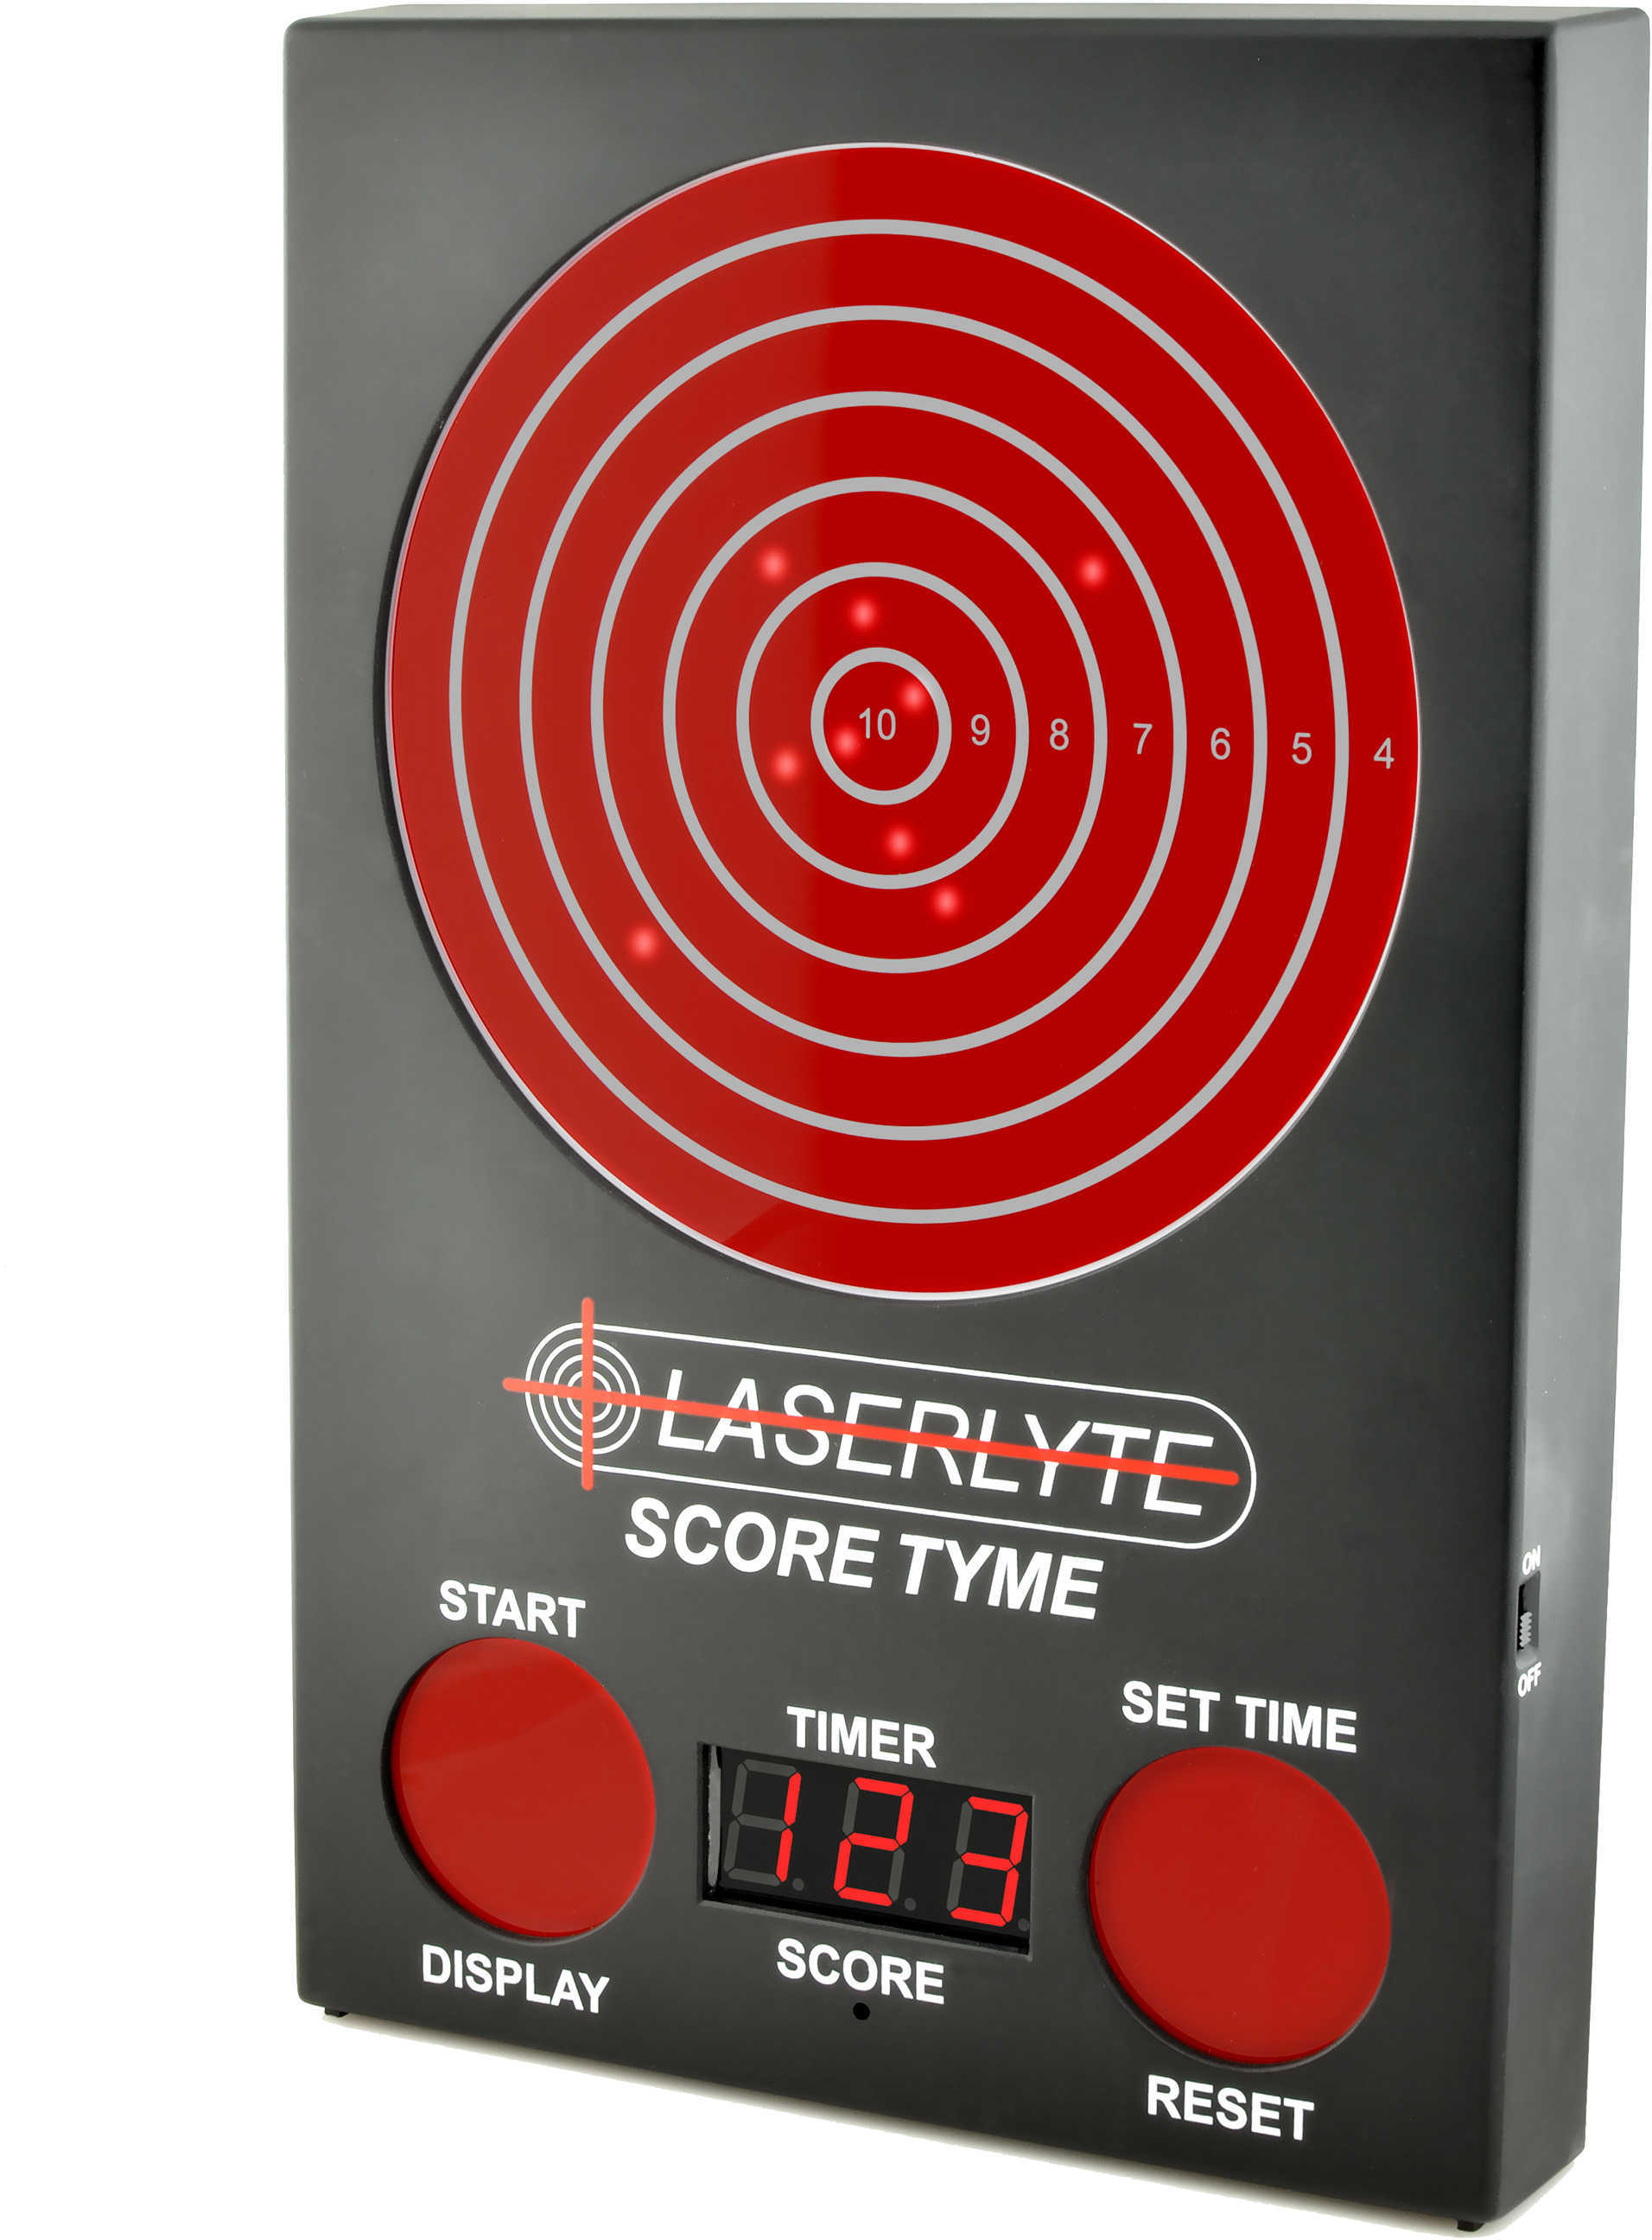 LaserLyte Score Tyme Target Md: TLB-XL